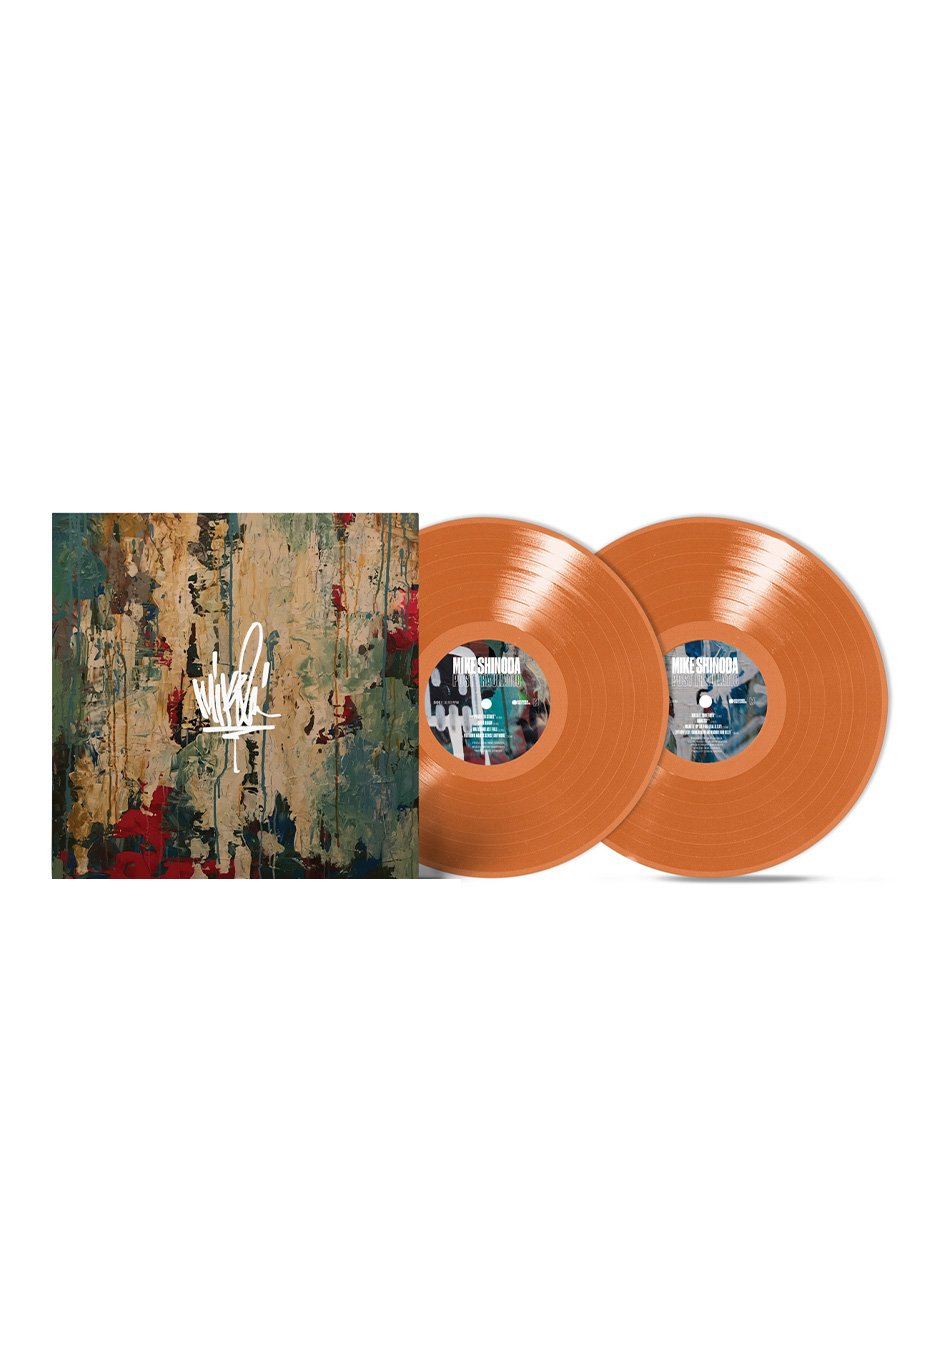 Mike Shinoda - Post Traumatic Ltd. Deluxe Orange Crush  - Colored 2 Vinyl